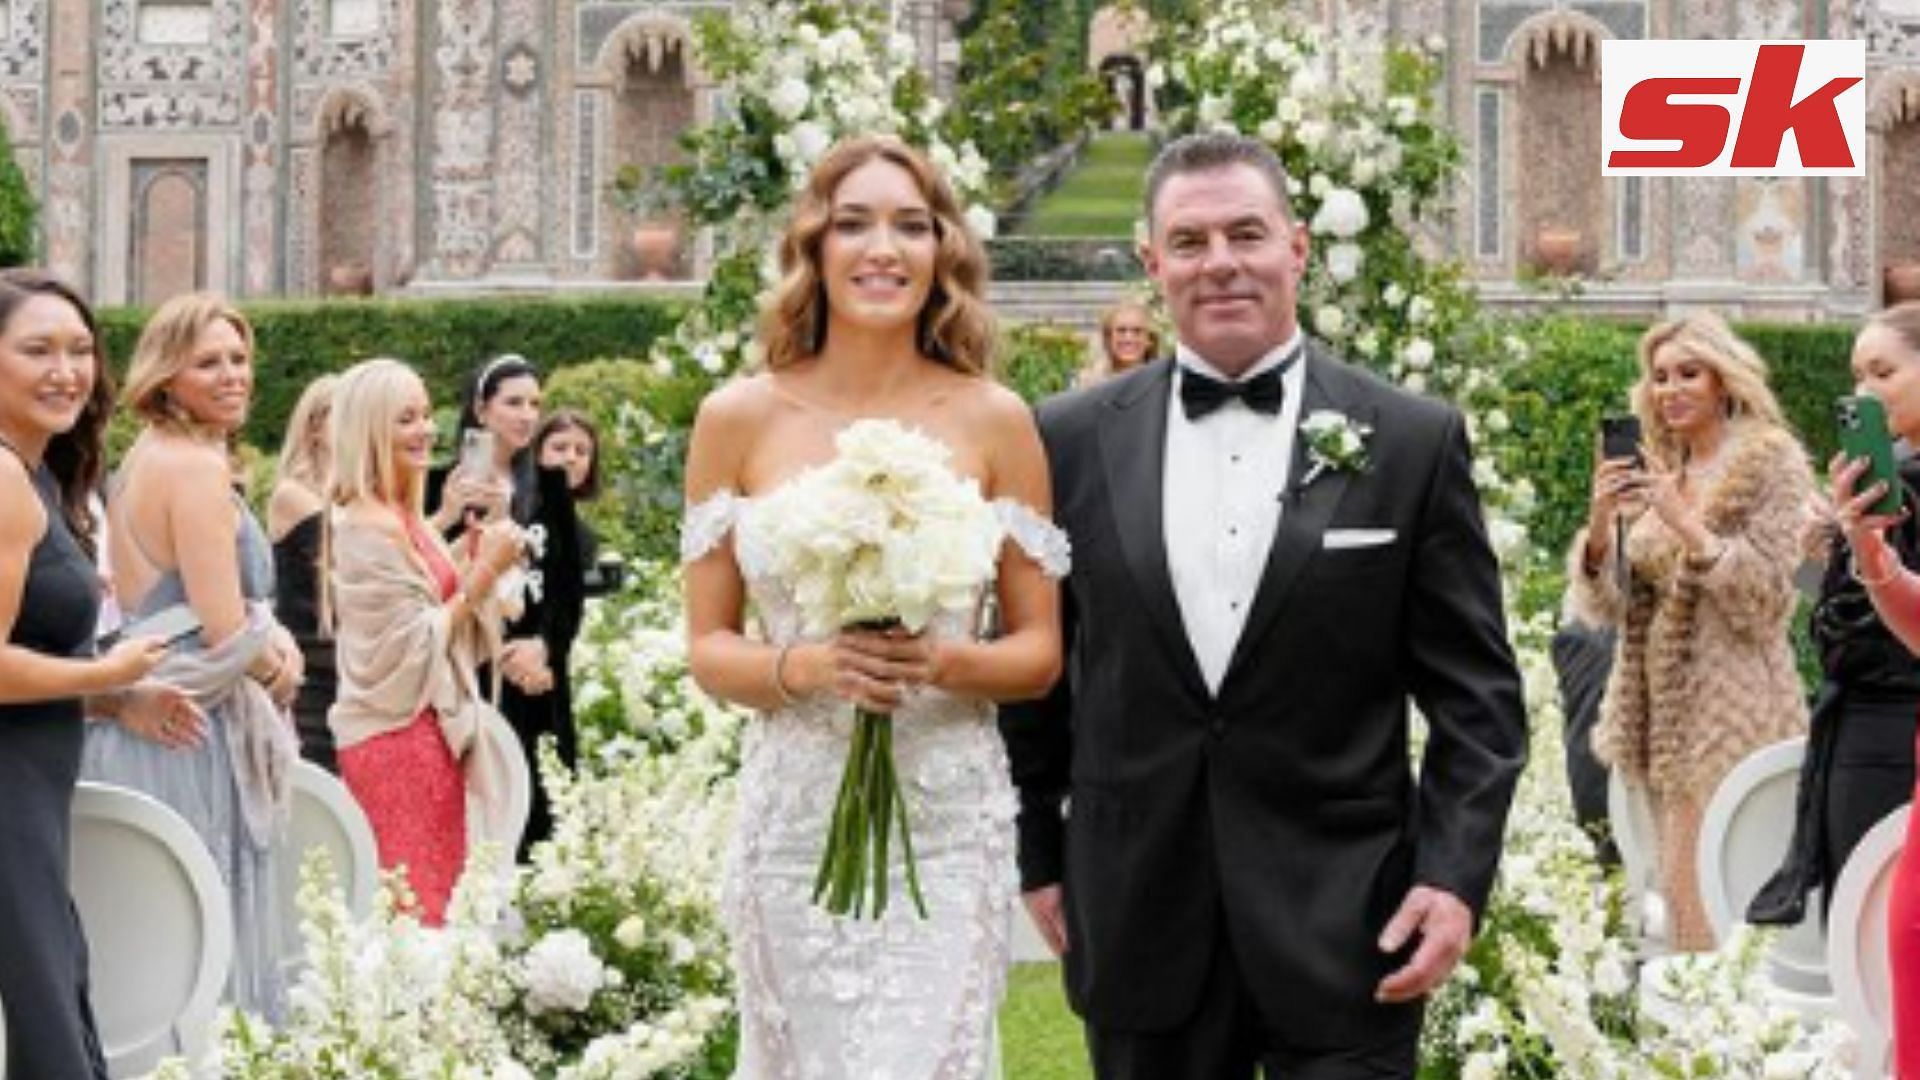 Photos: Kortnie O'Connor shared glimpses of her lavish bachelorette party days before Italian wedding